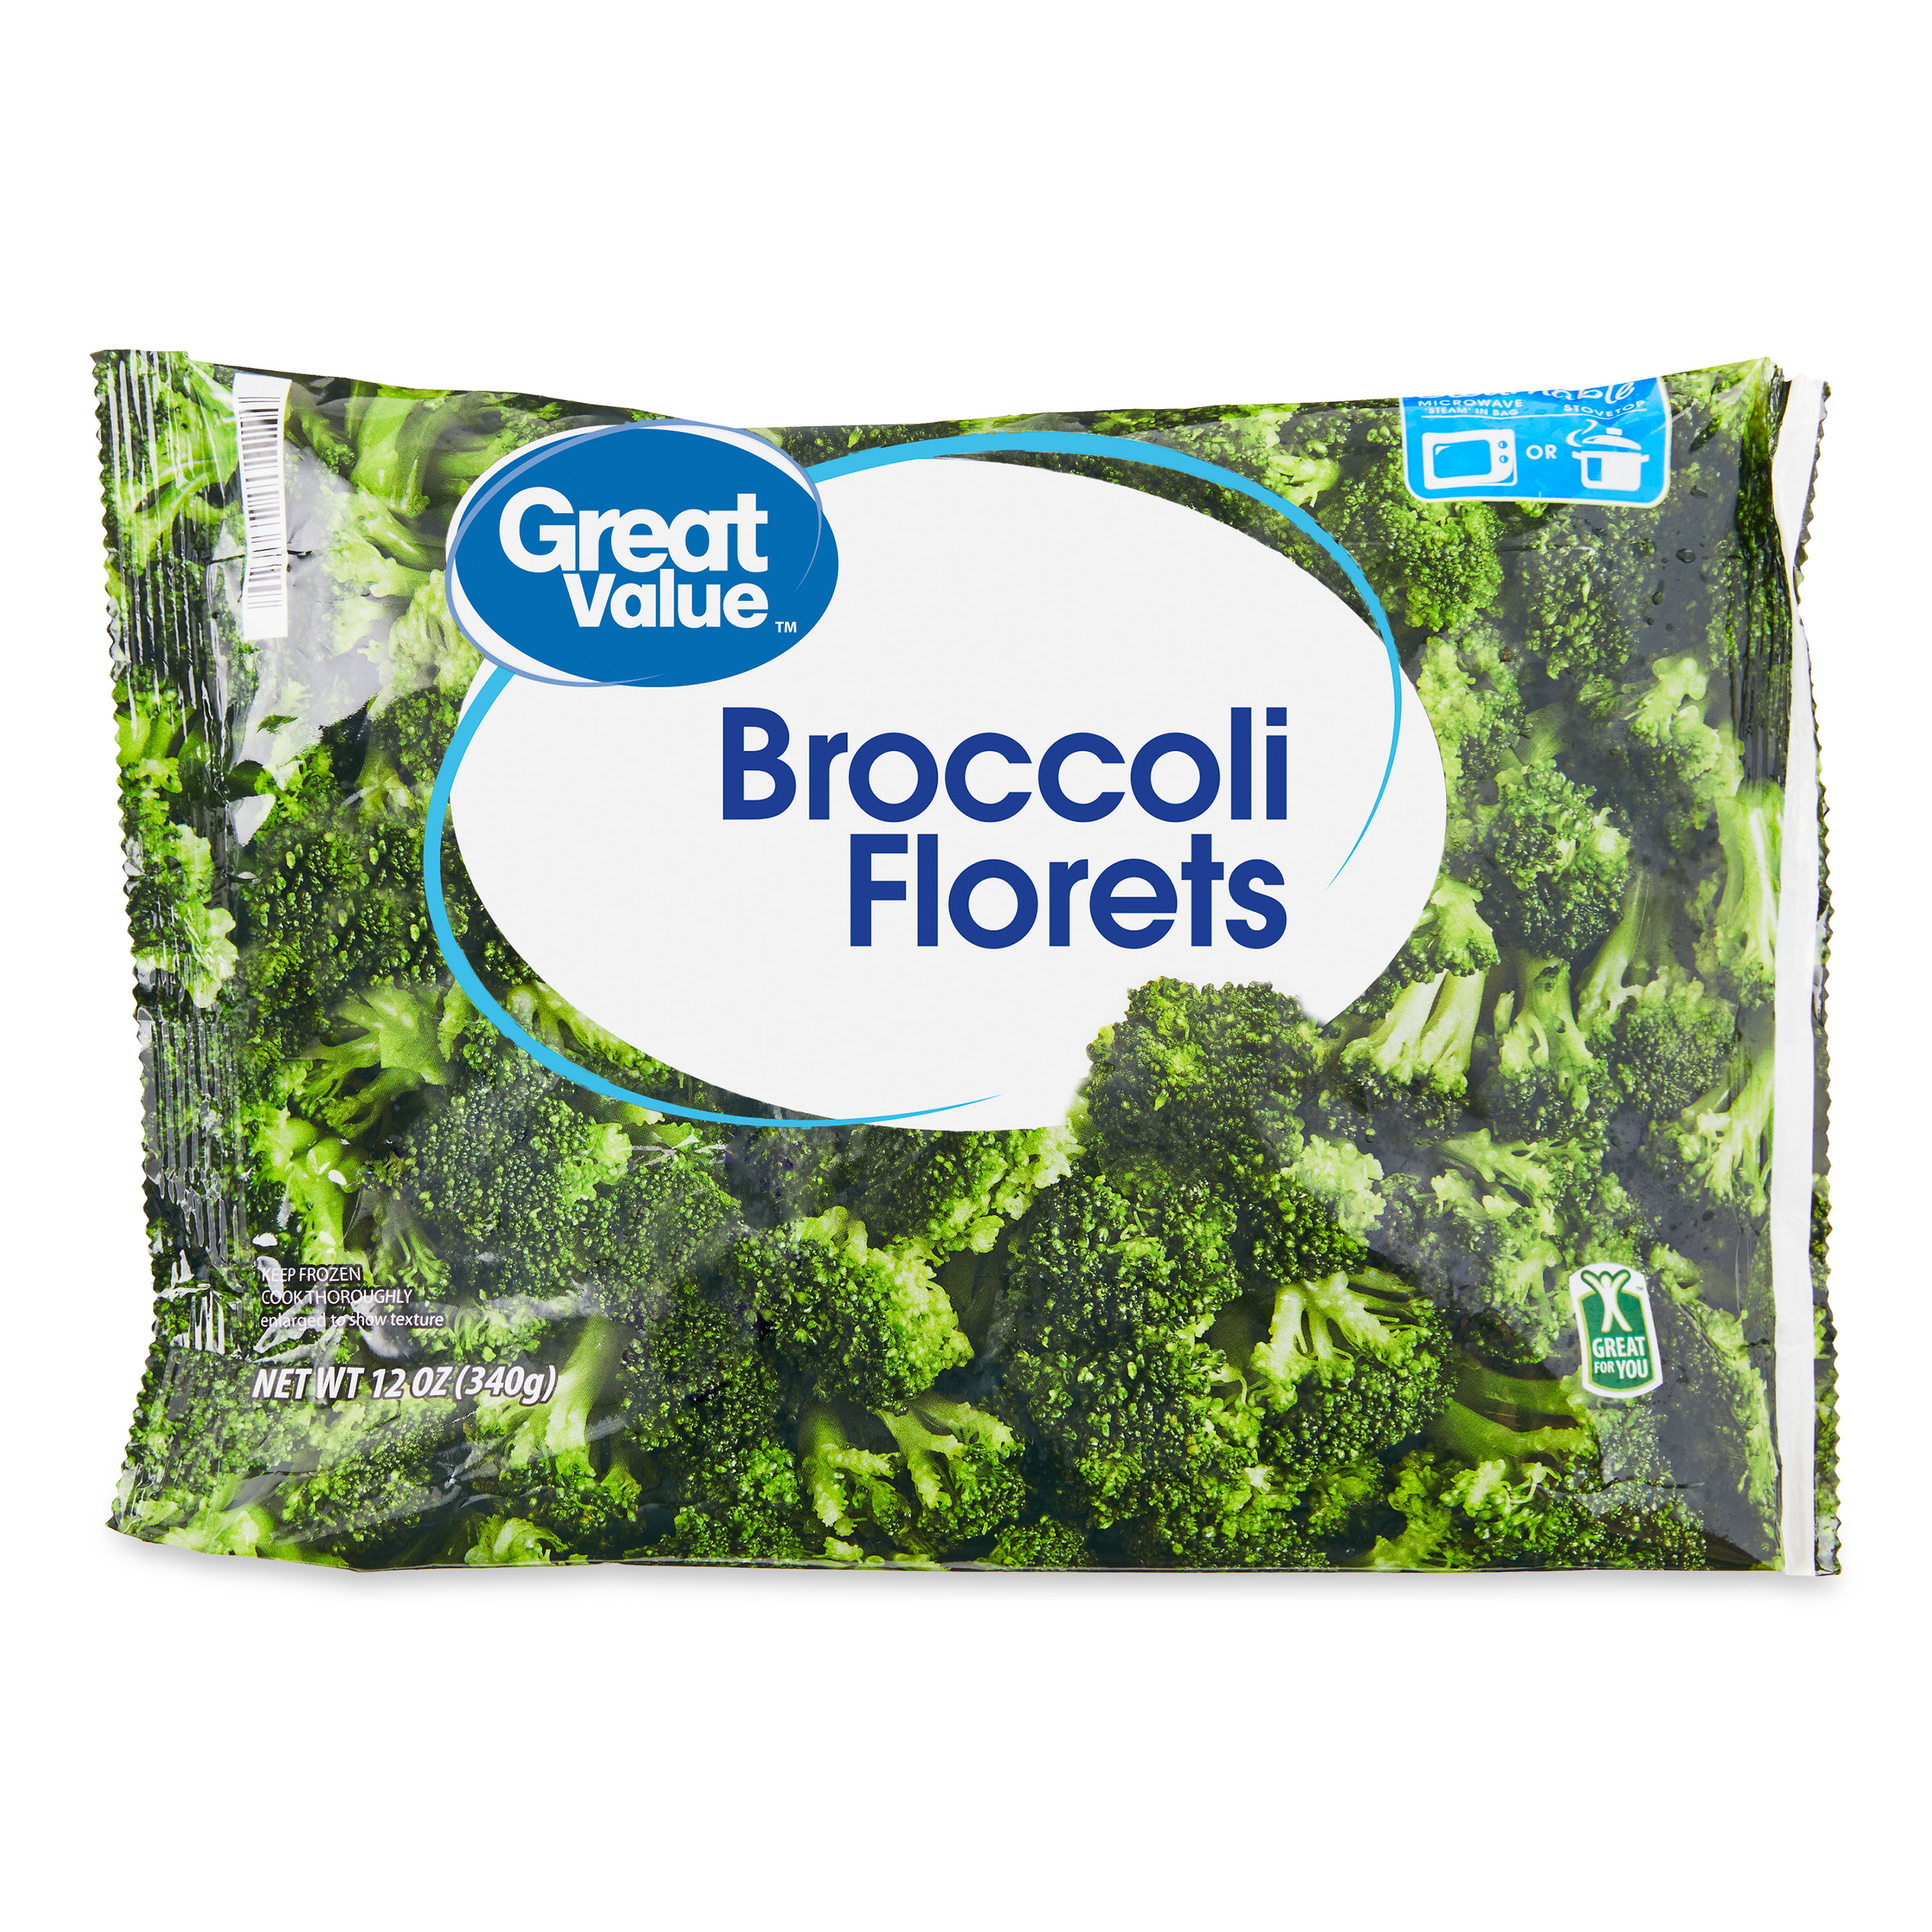 Great Value Frozen Broccoli Florets, 12 oz Steamable Bag - image 1 of 8